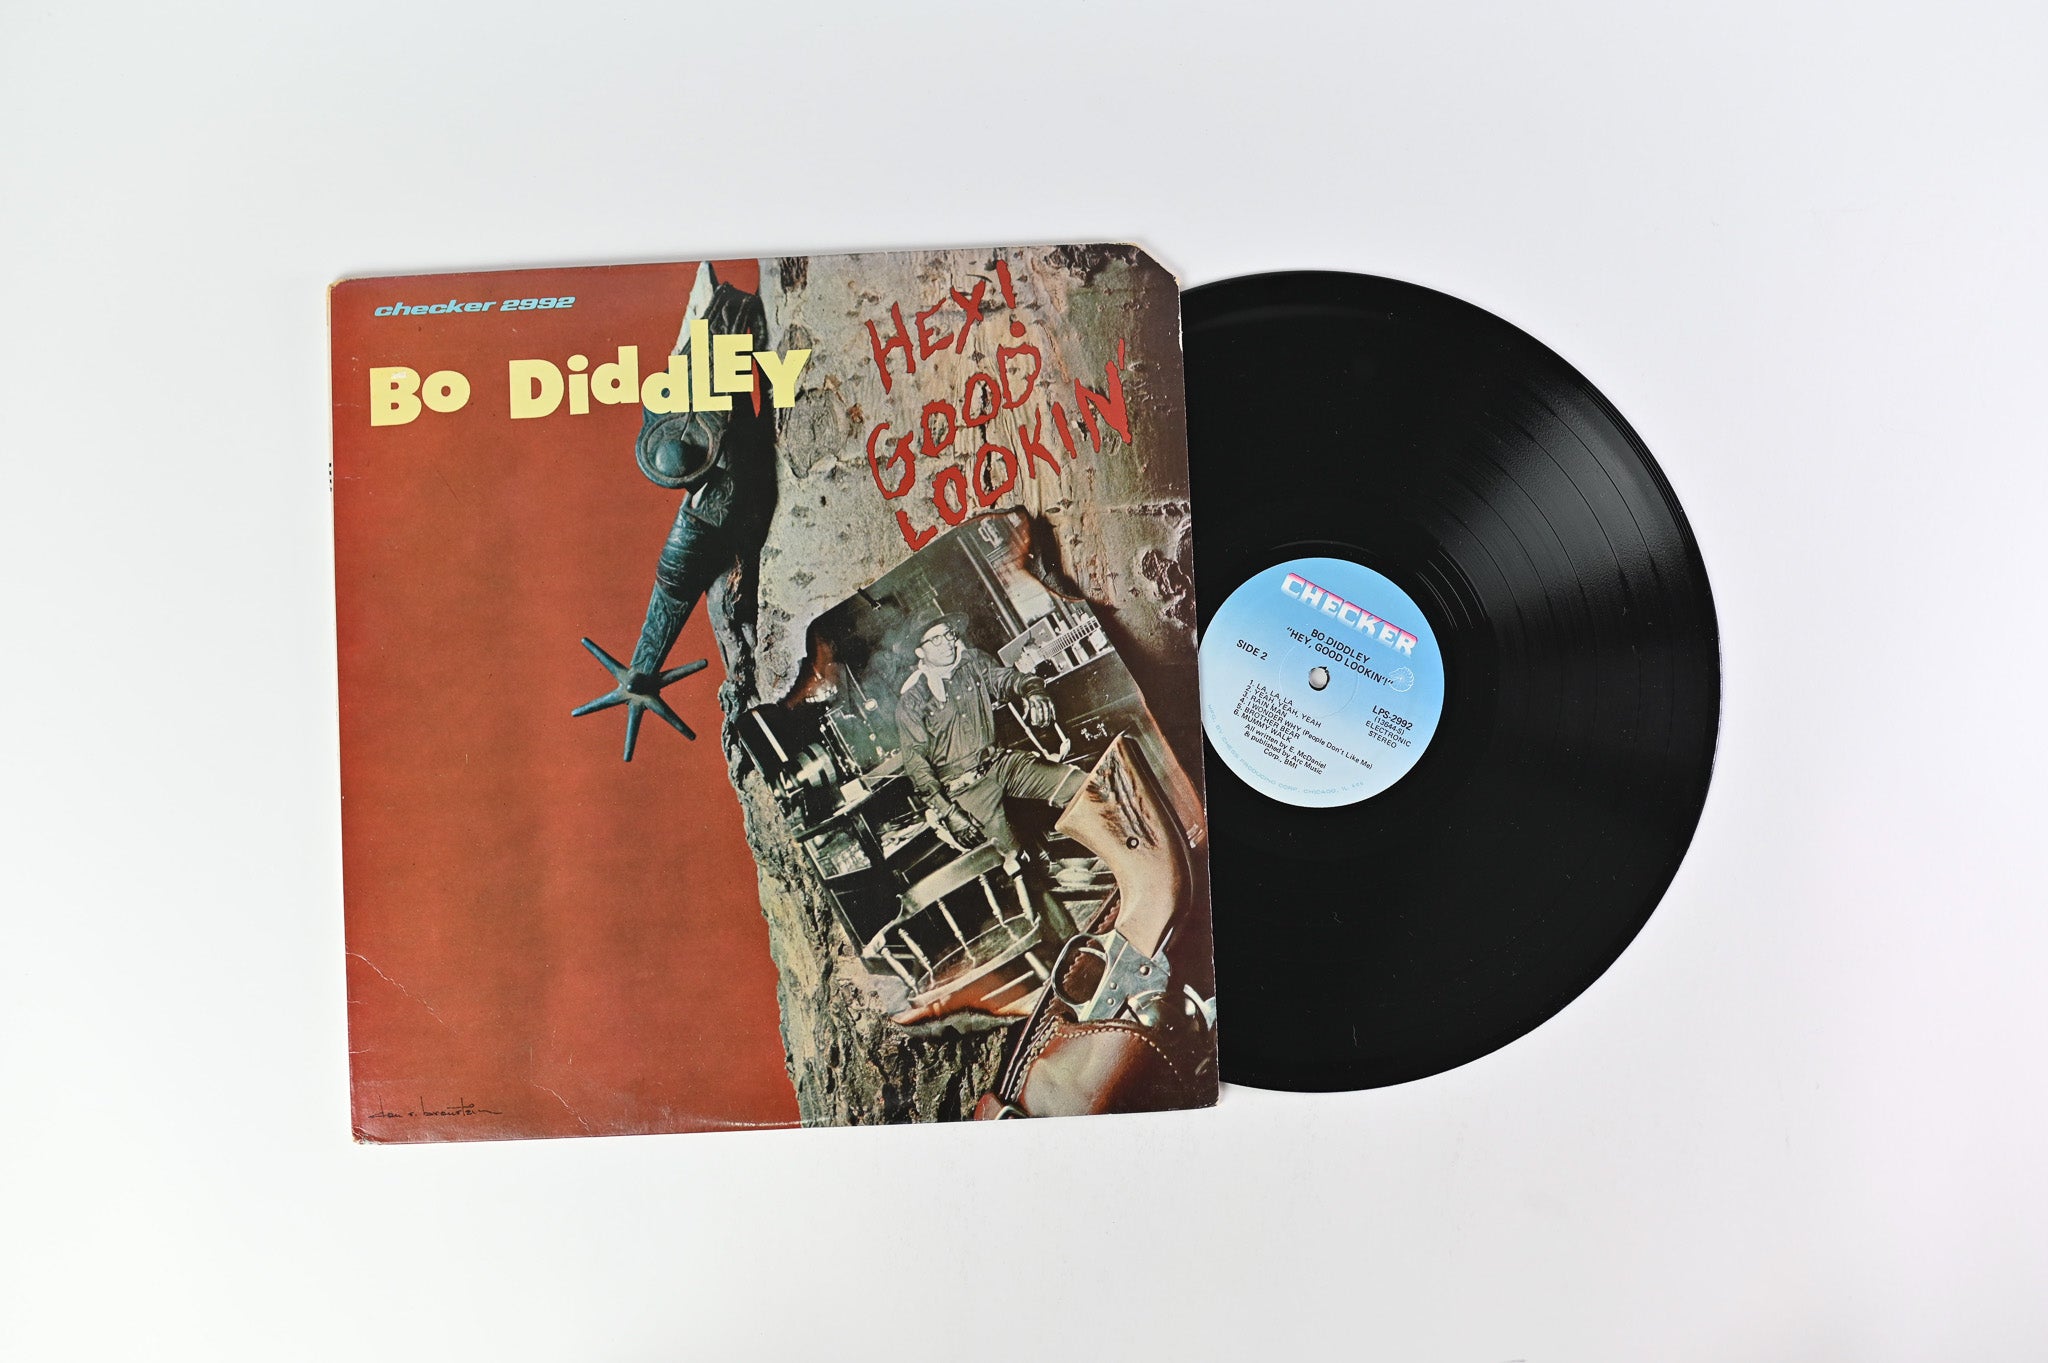 Bo Diddley - Hey! Good Lookin' on Checker